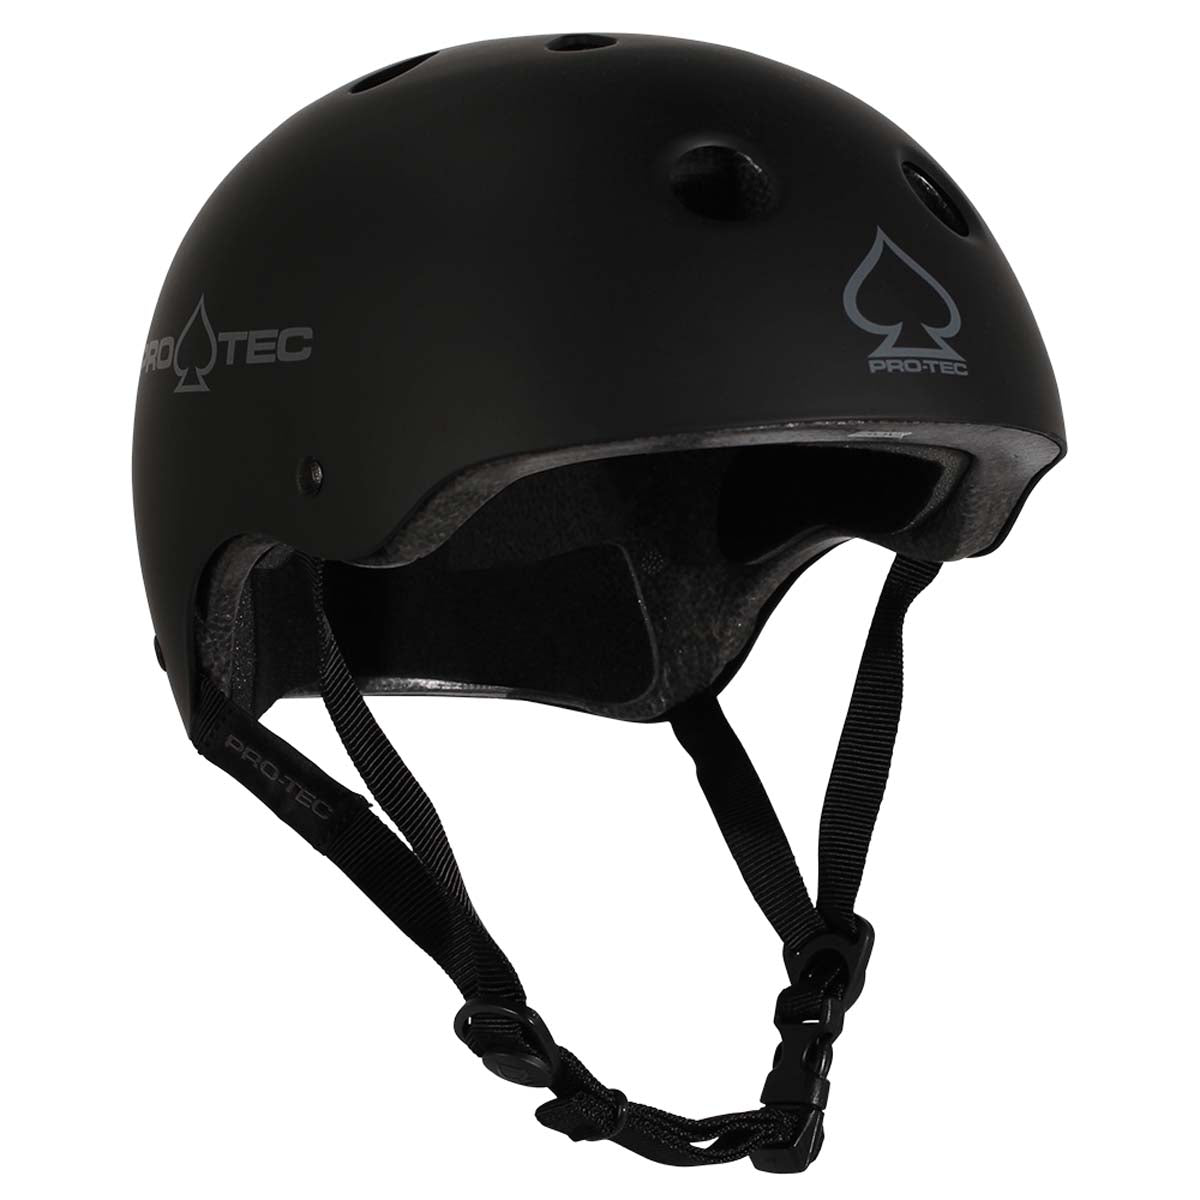 Pro-Tec Classic Certified Helmet - Matte Black image 2